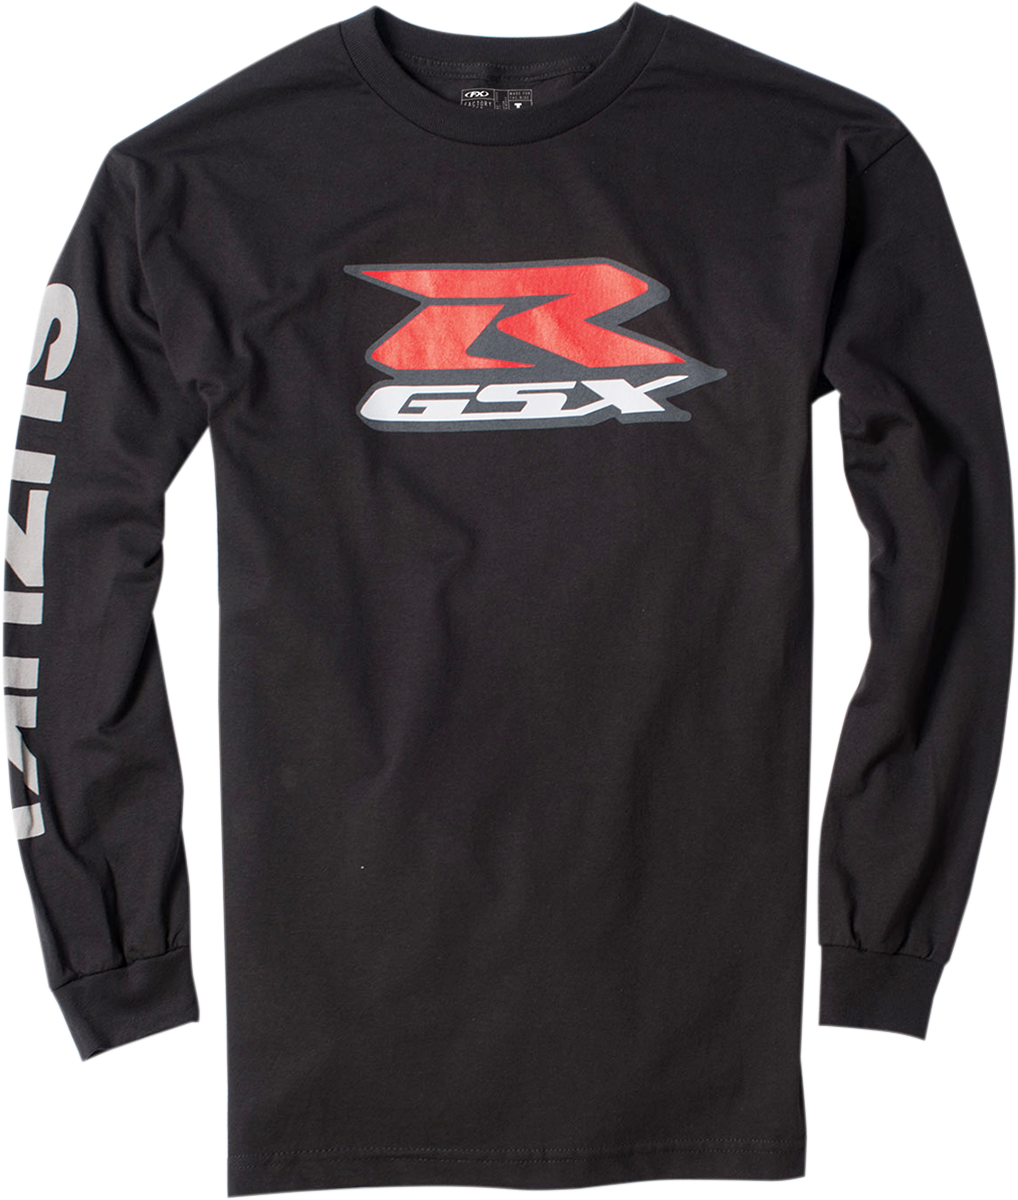 FACTORY EFFEX Suzuki GSXR Long-Sleeve T-Shirt - Black - 2XL 17-87418